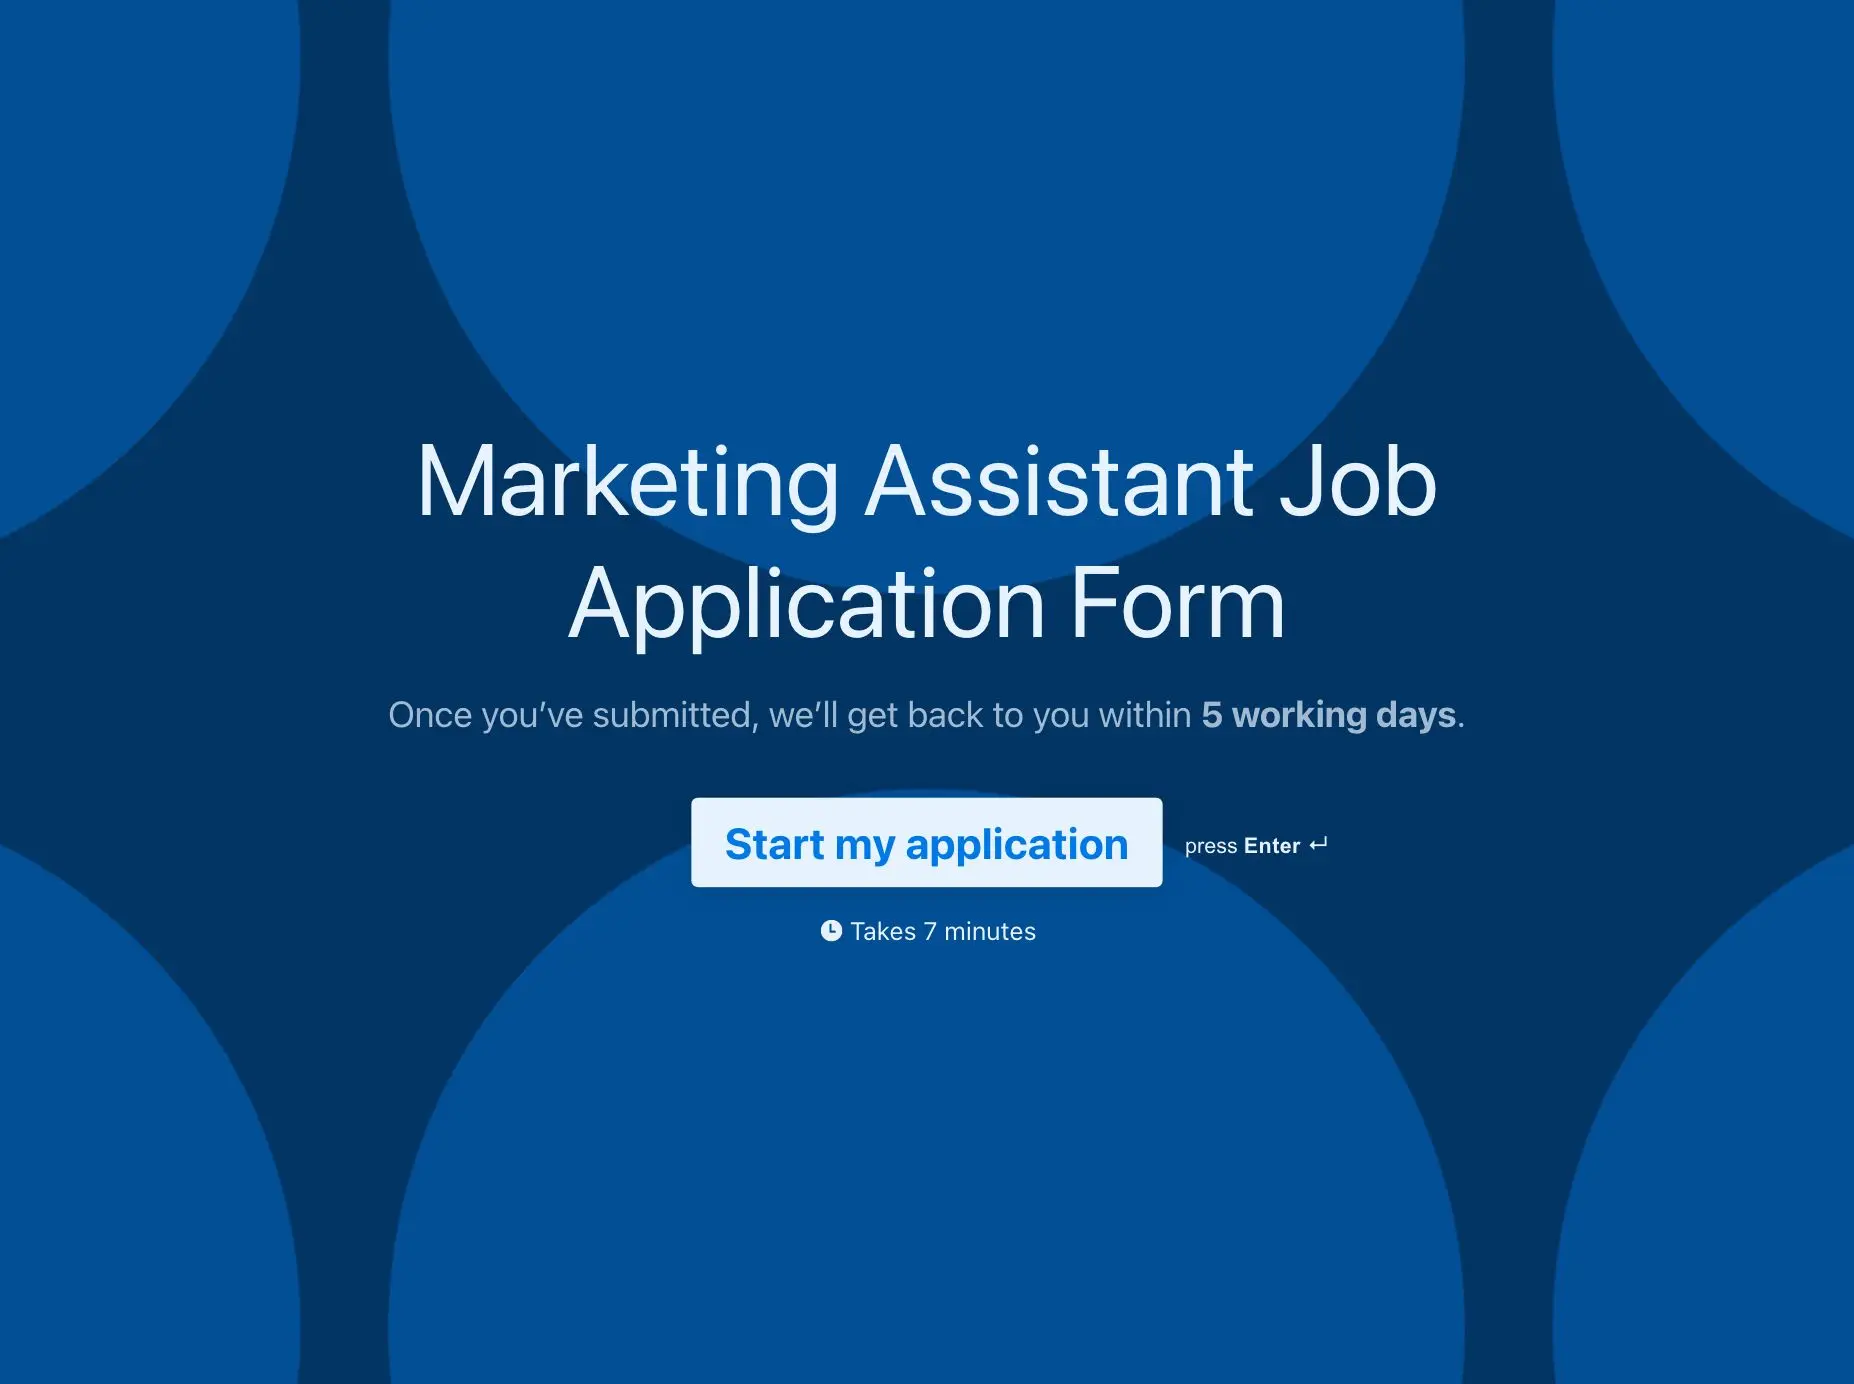 Marketing Assistant Job Application Form Template Hero